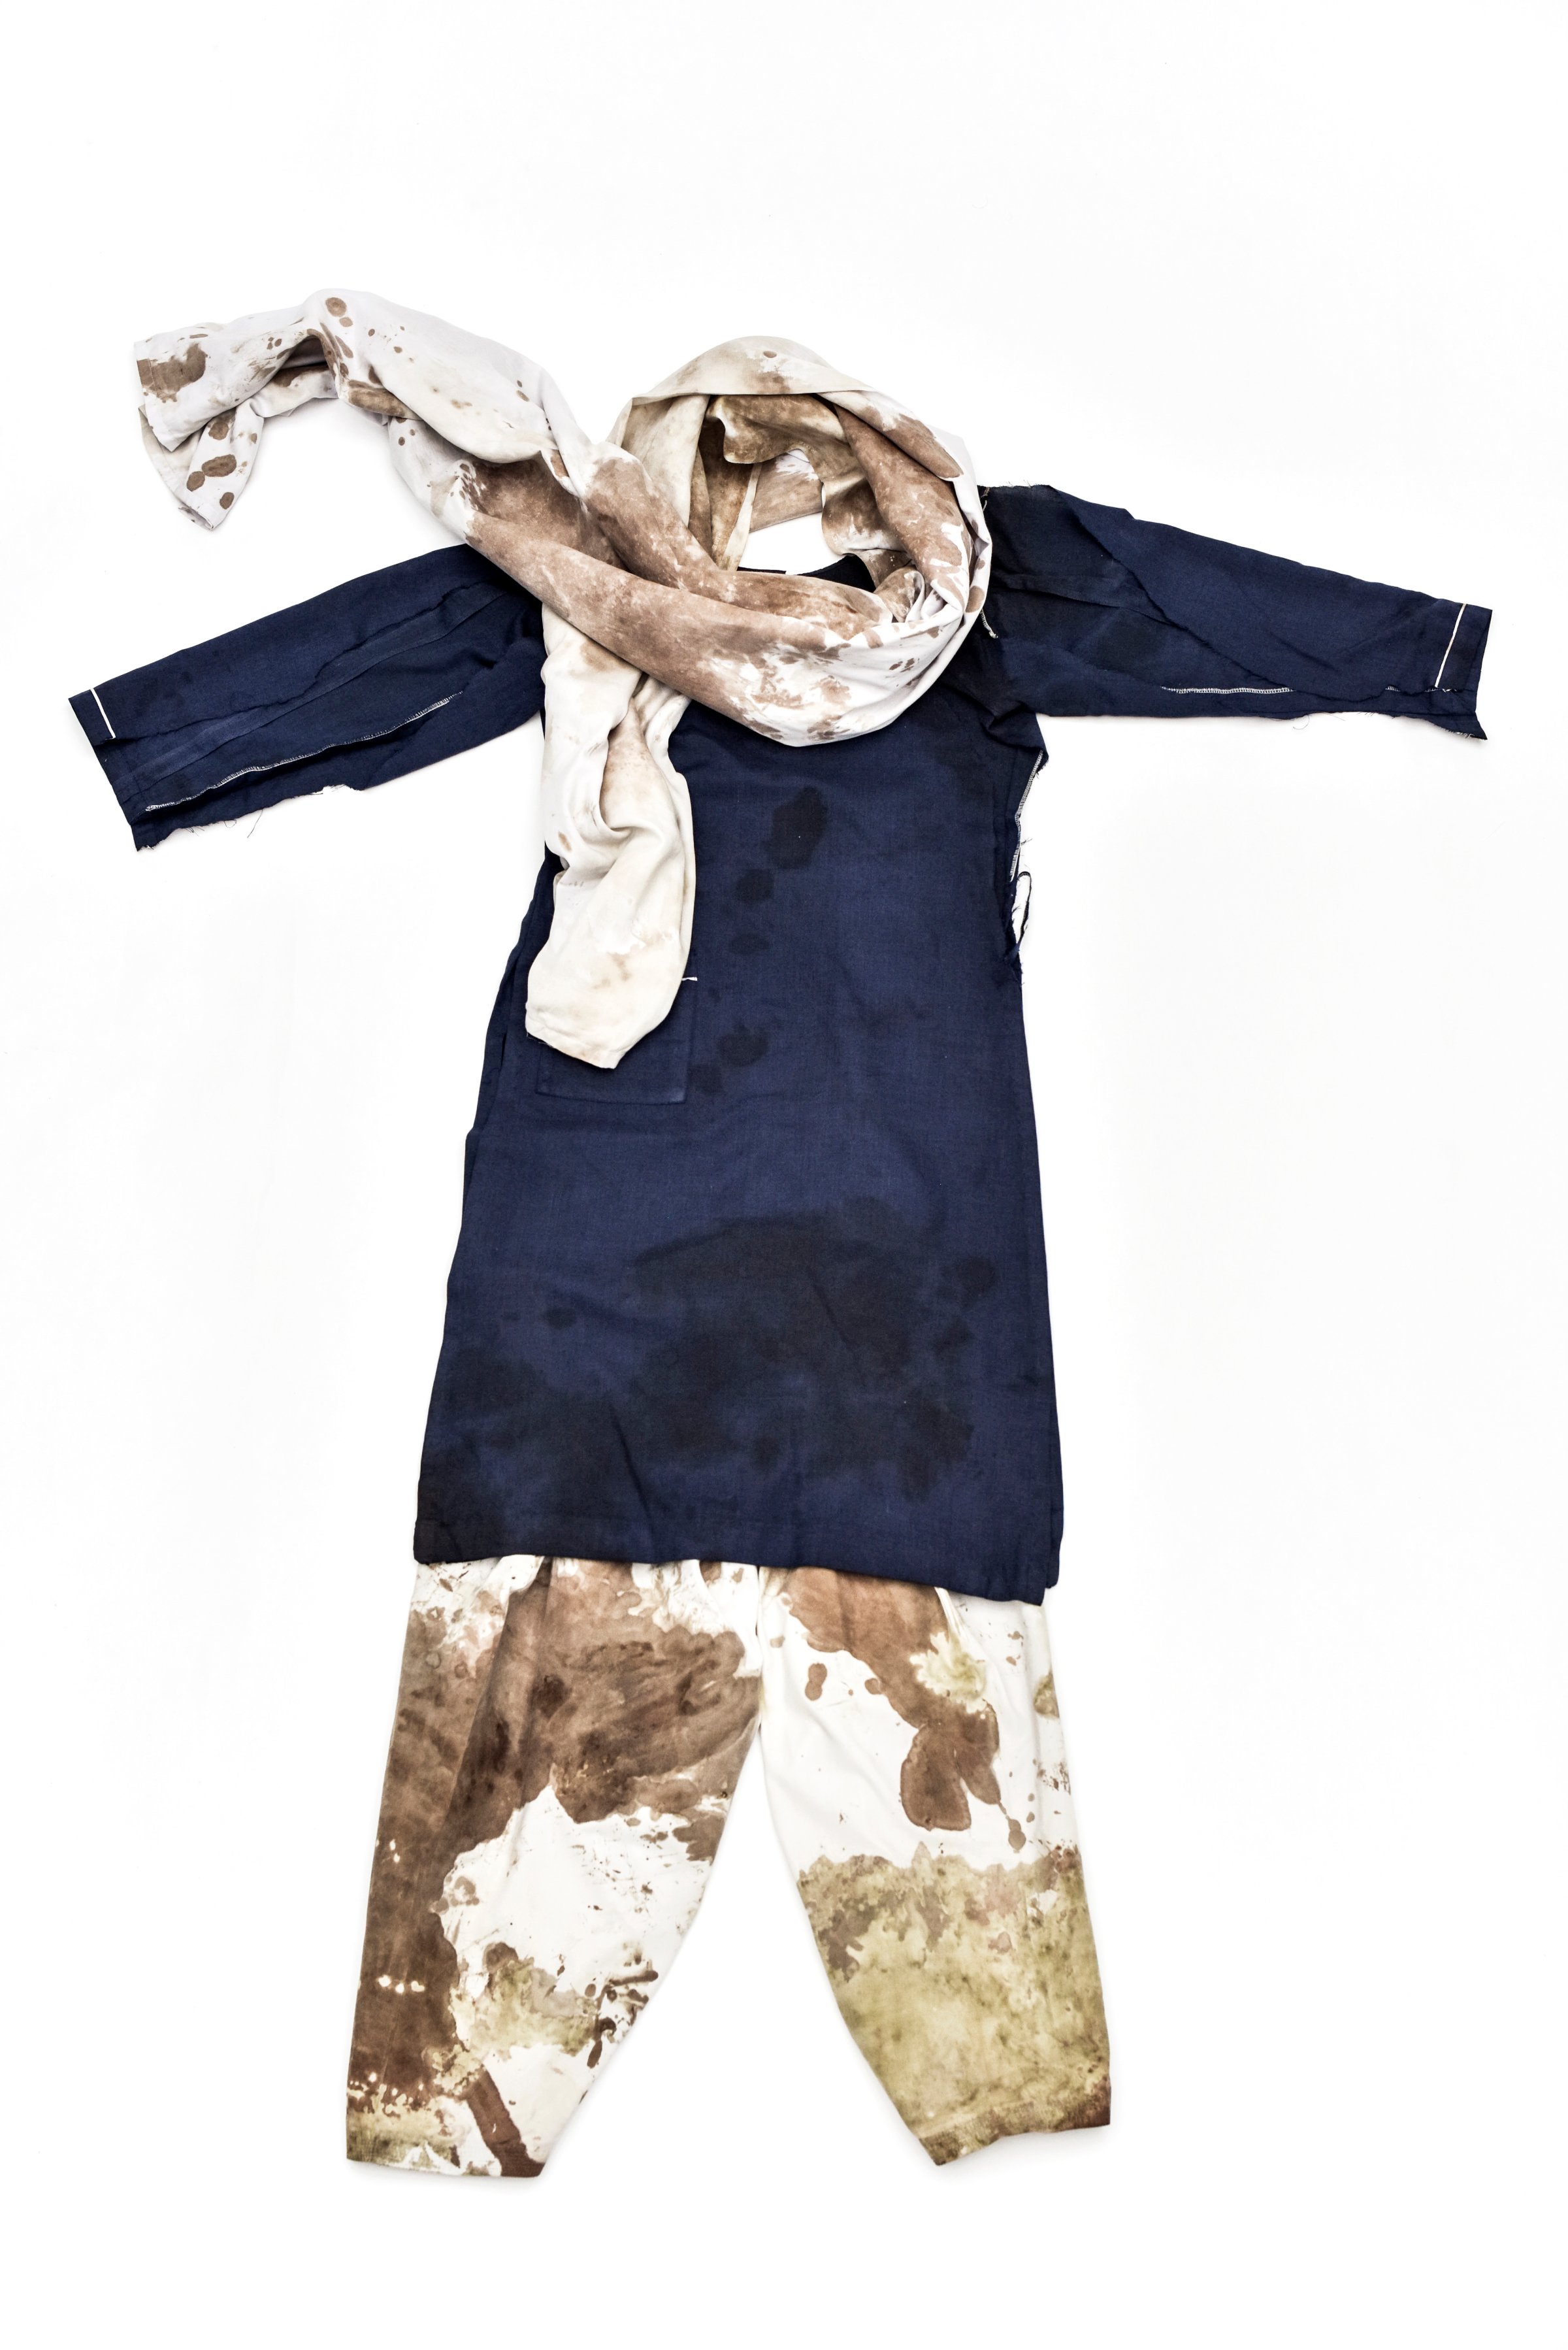 Malala Uniform